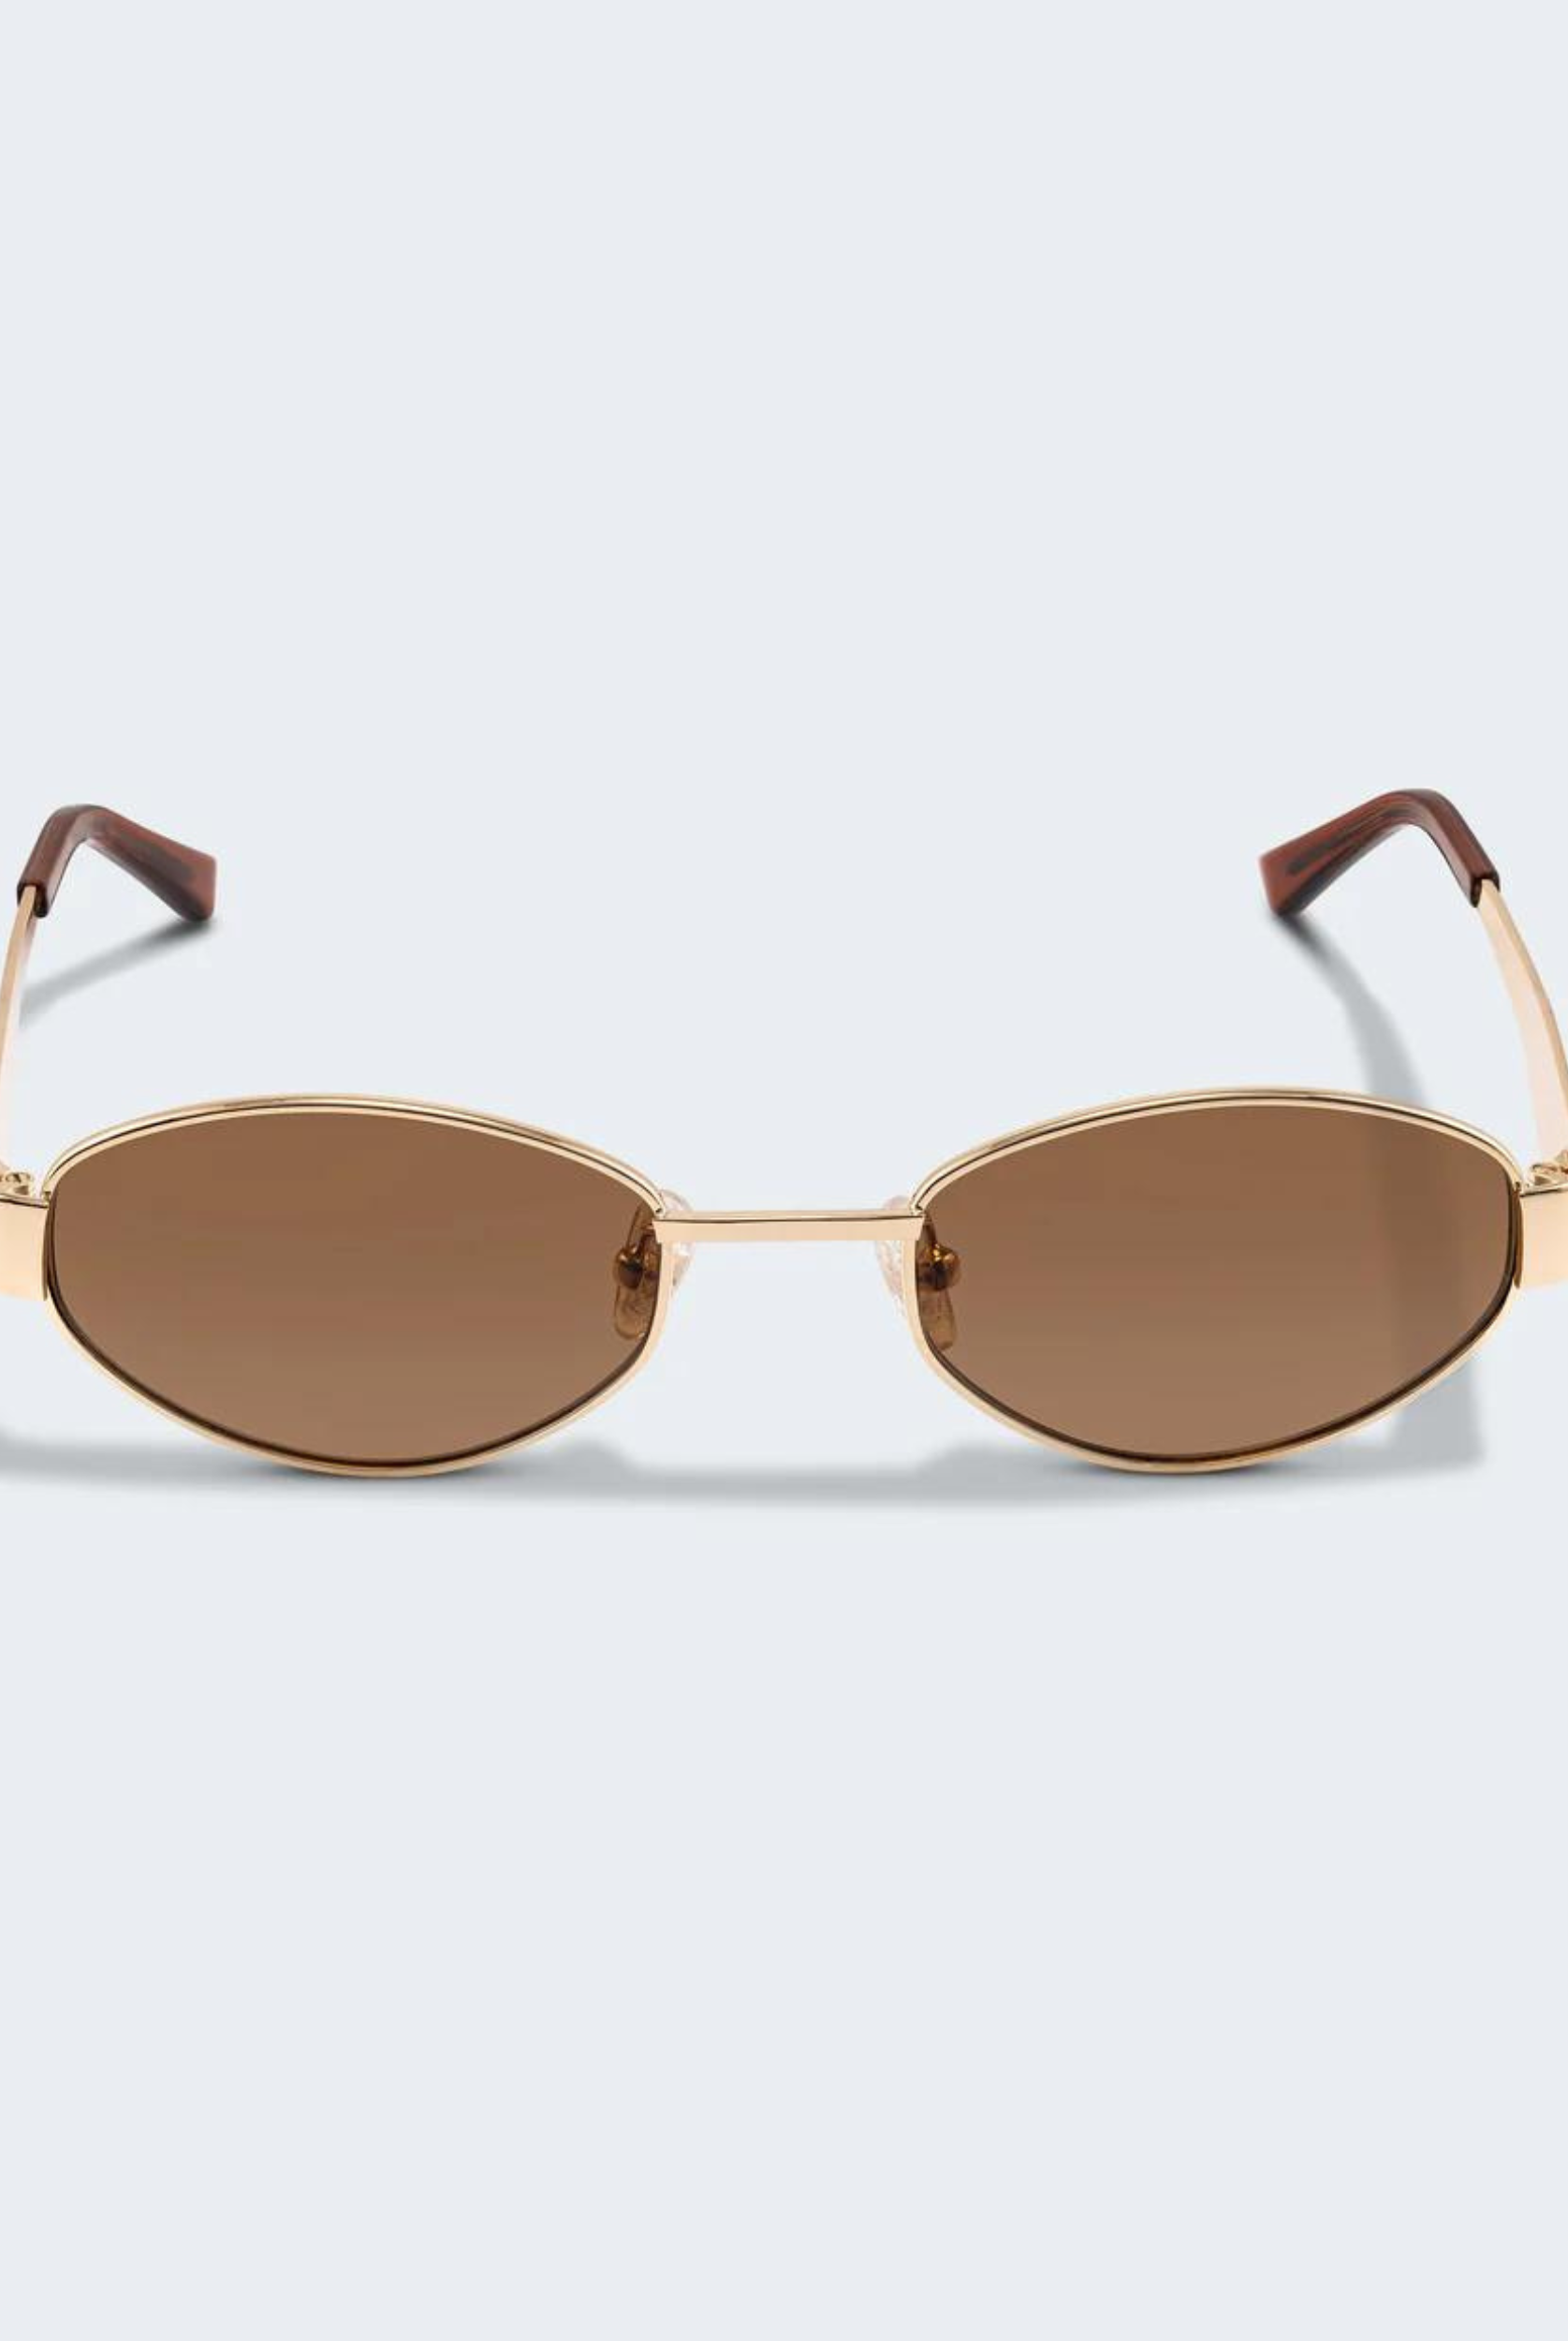 Luv Lou The Boston Gold frame sunglasses